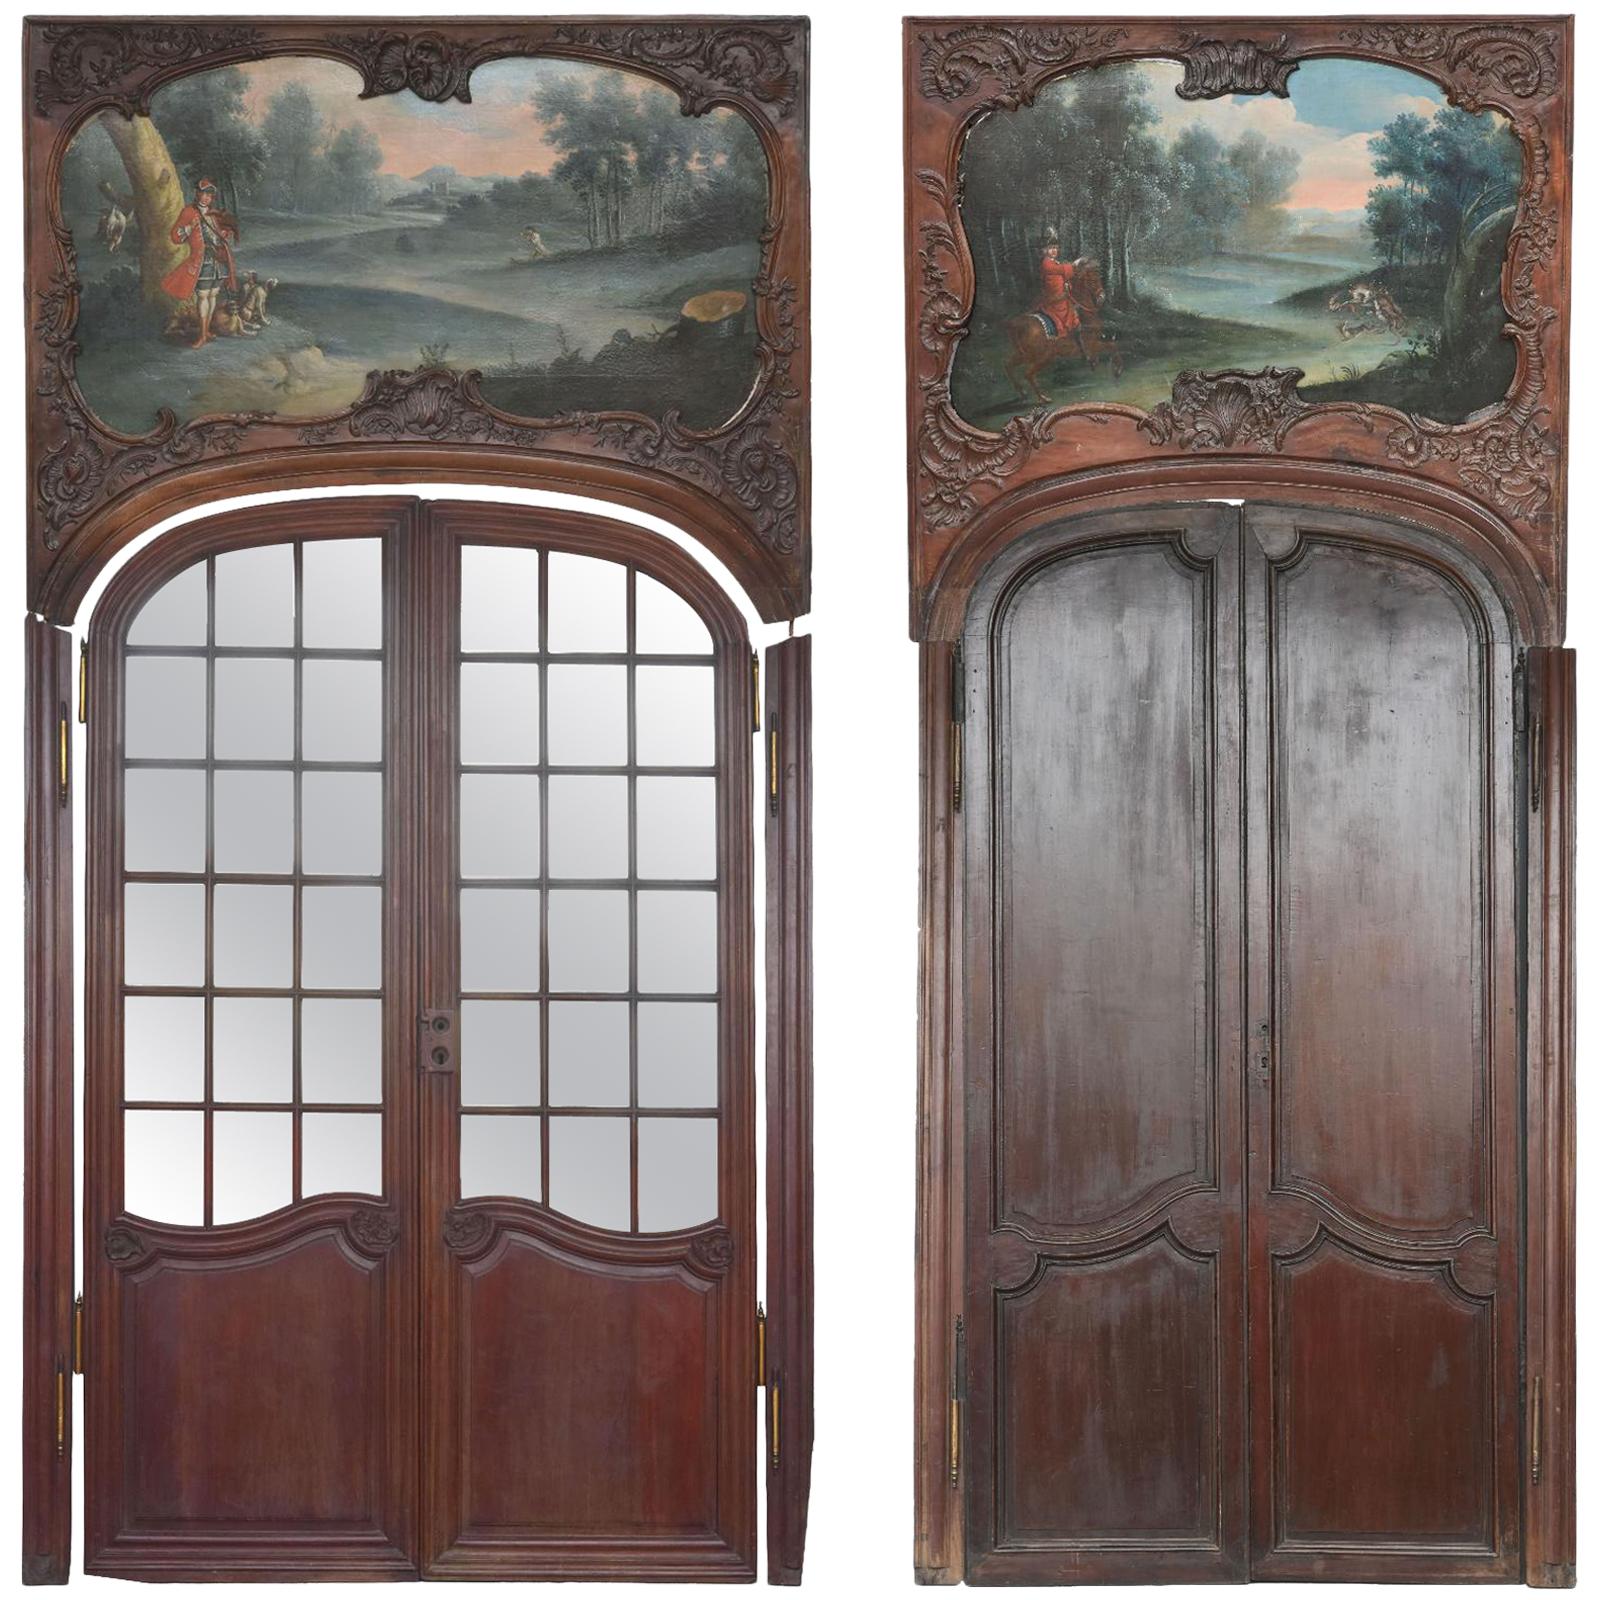 Mahagoni-Türen aus dem 18. Jahrhundert, Louis XV.-Periode, dekoriert mit Jagd-Gemälde